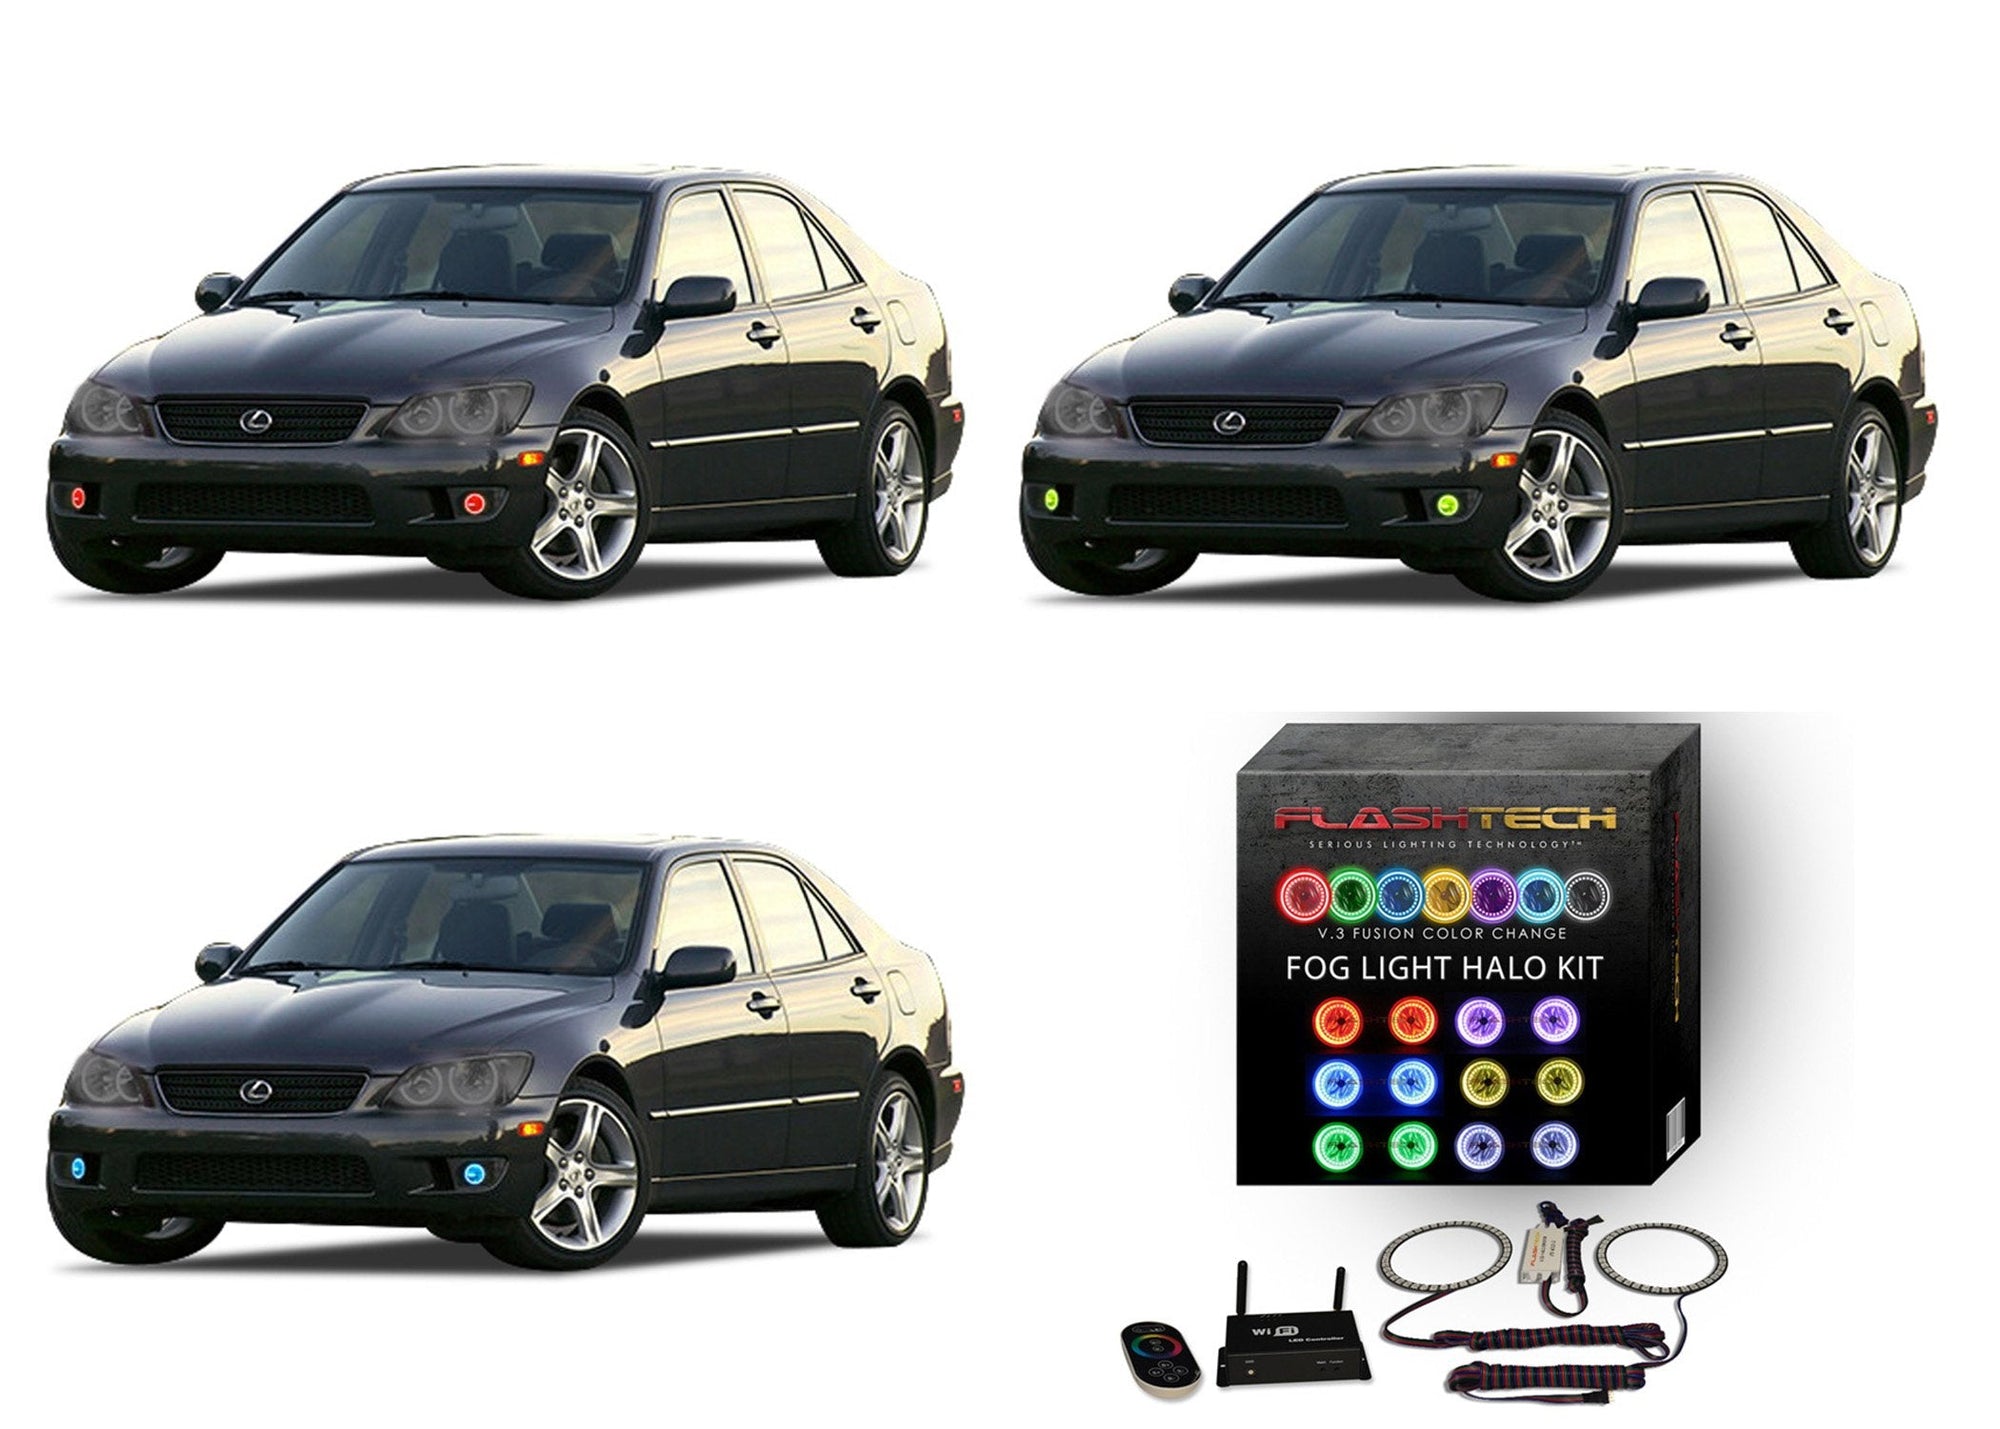 Lexus-is300-2001, 2002, 2003, 2004, 2005-LED-Halo-Fog Lights-RGB-WiFi Remote-LX-IS30105-V3FWI